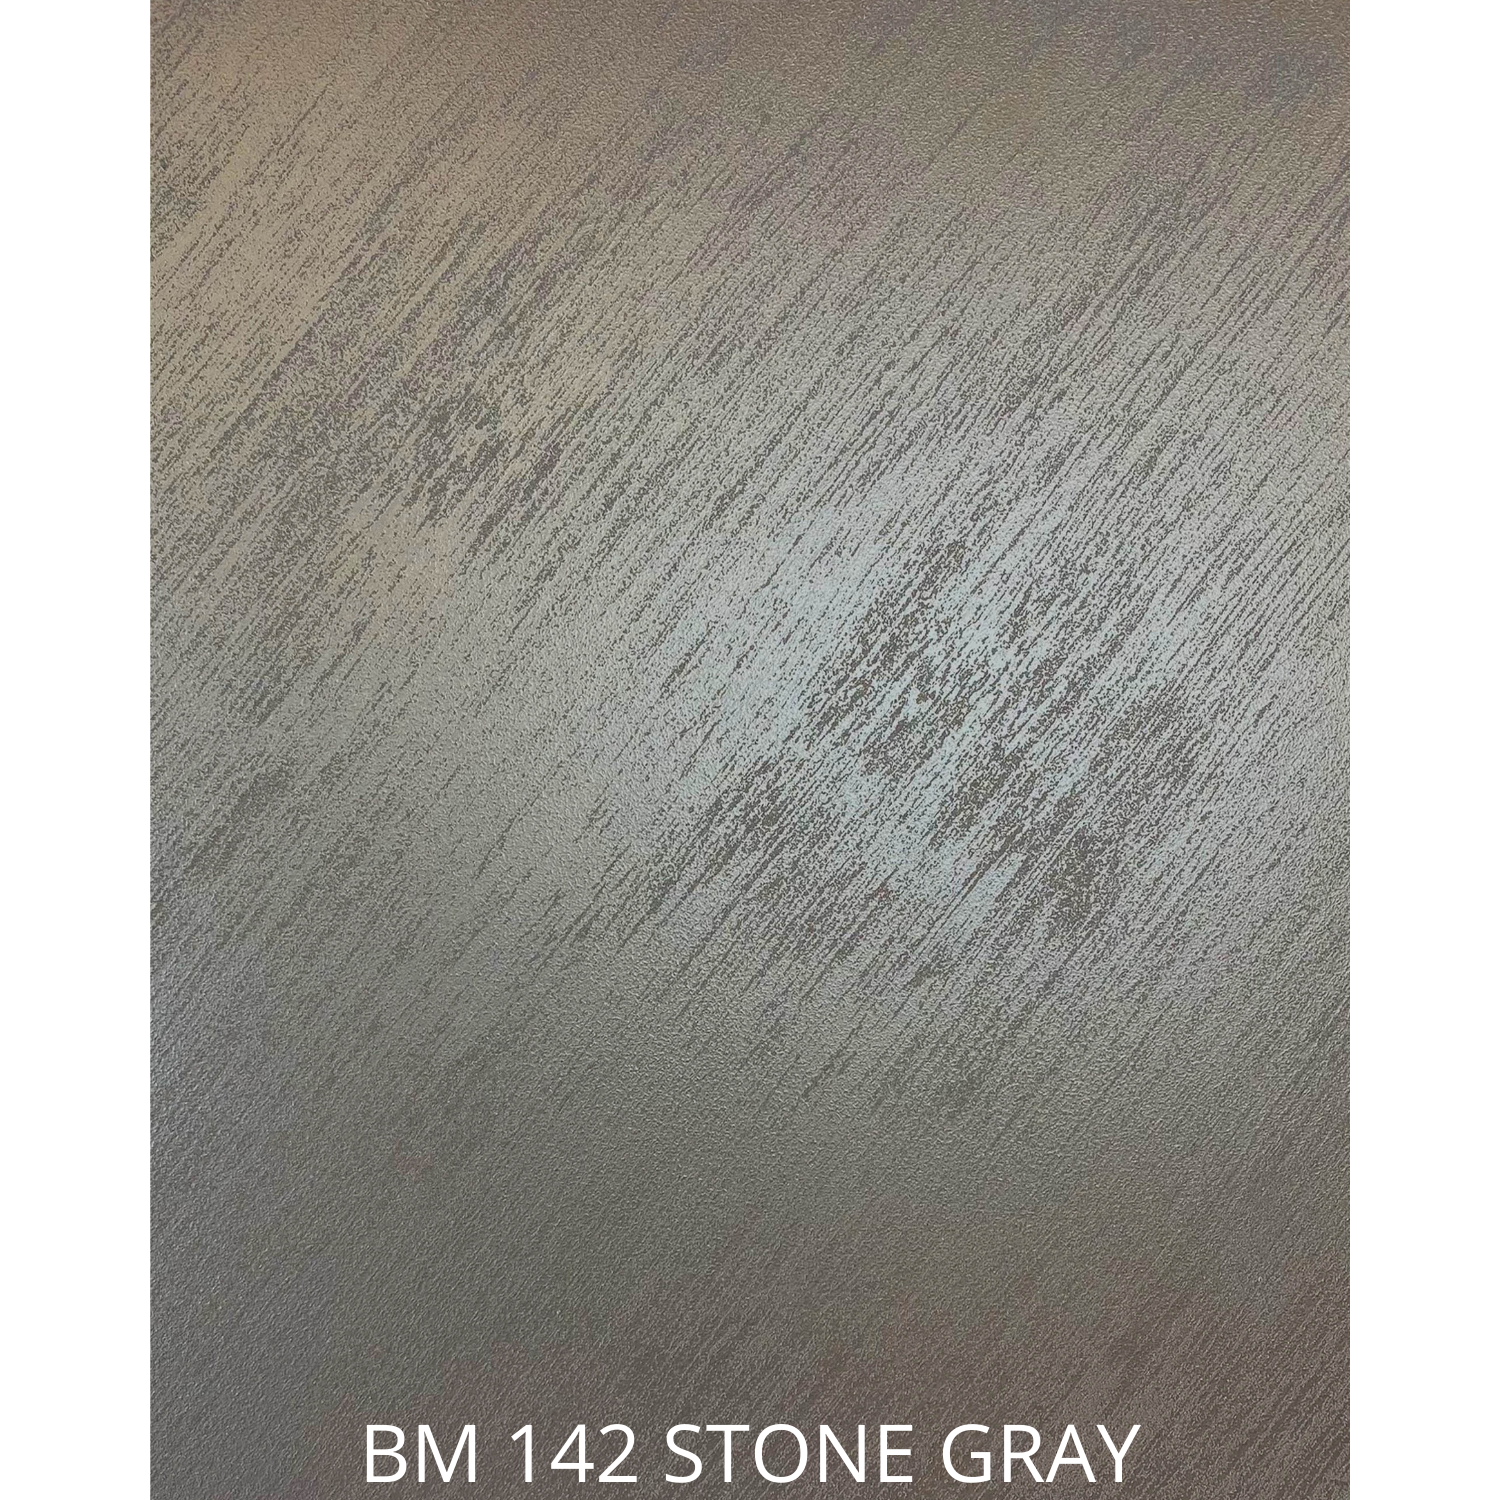 BM 132 SILVER GRAY